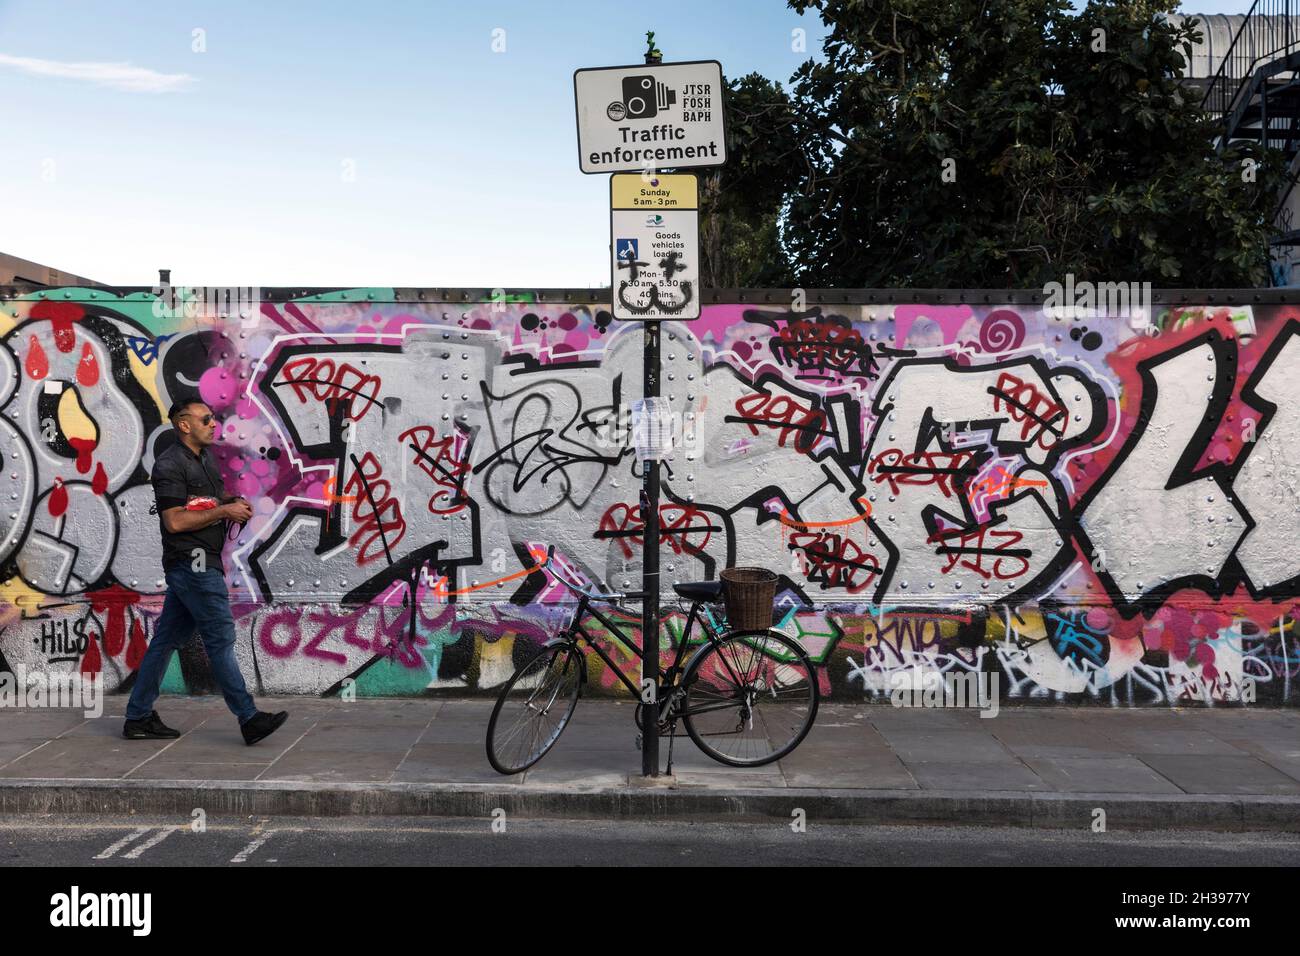 Graffitti on a street in Shoreditch, east London Stock Photo